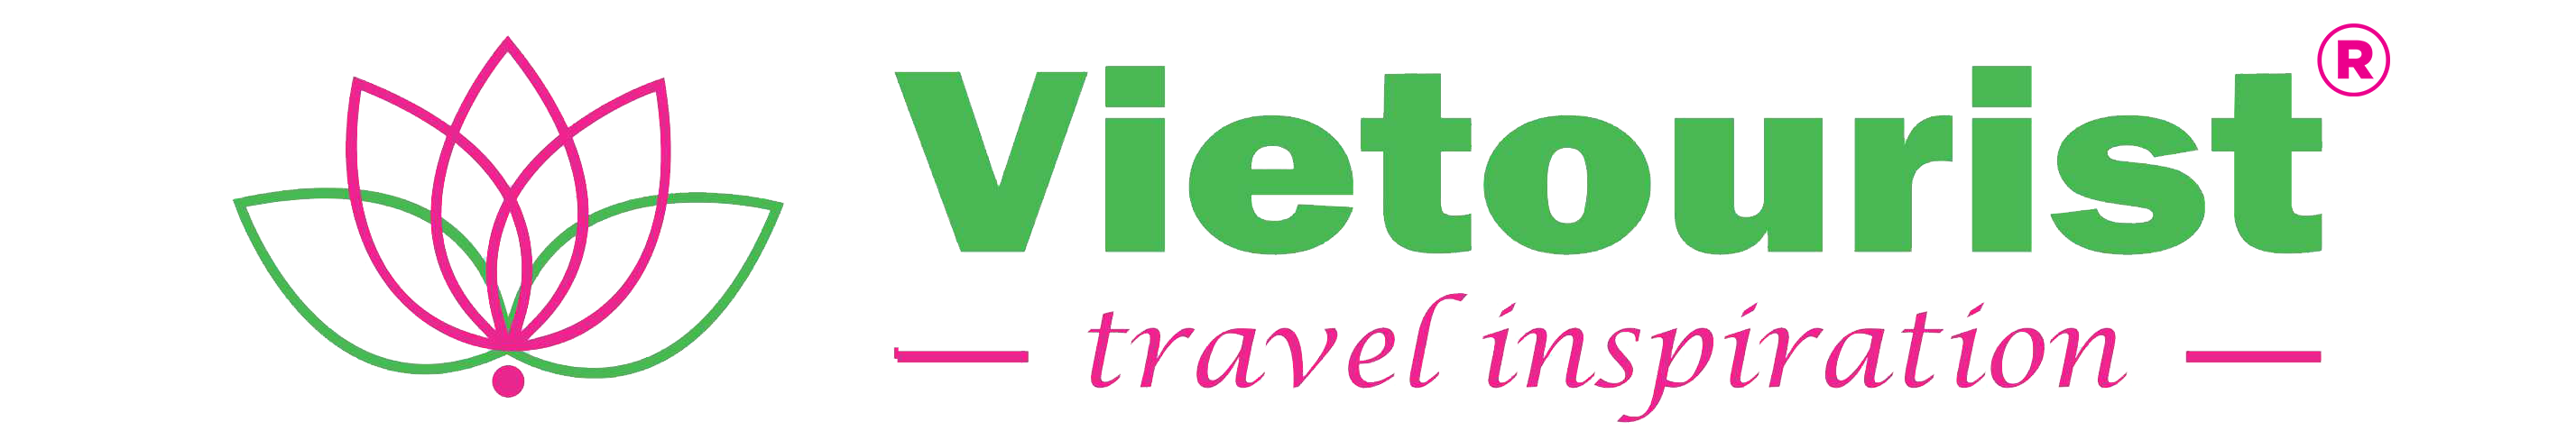 CTCP Du lịch Vietourist